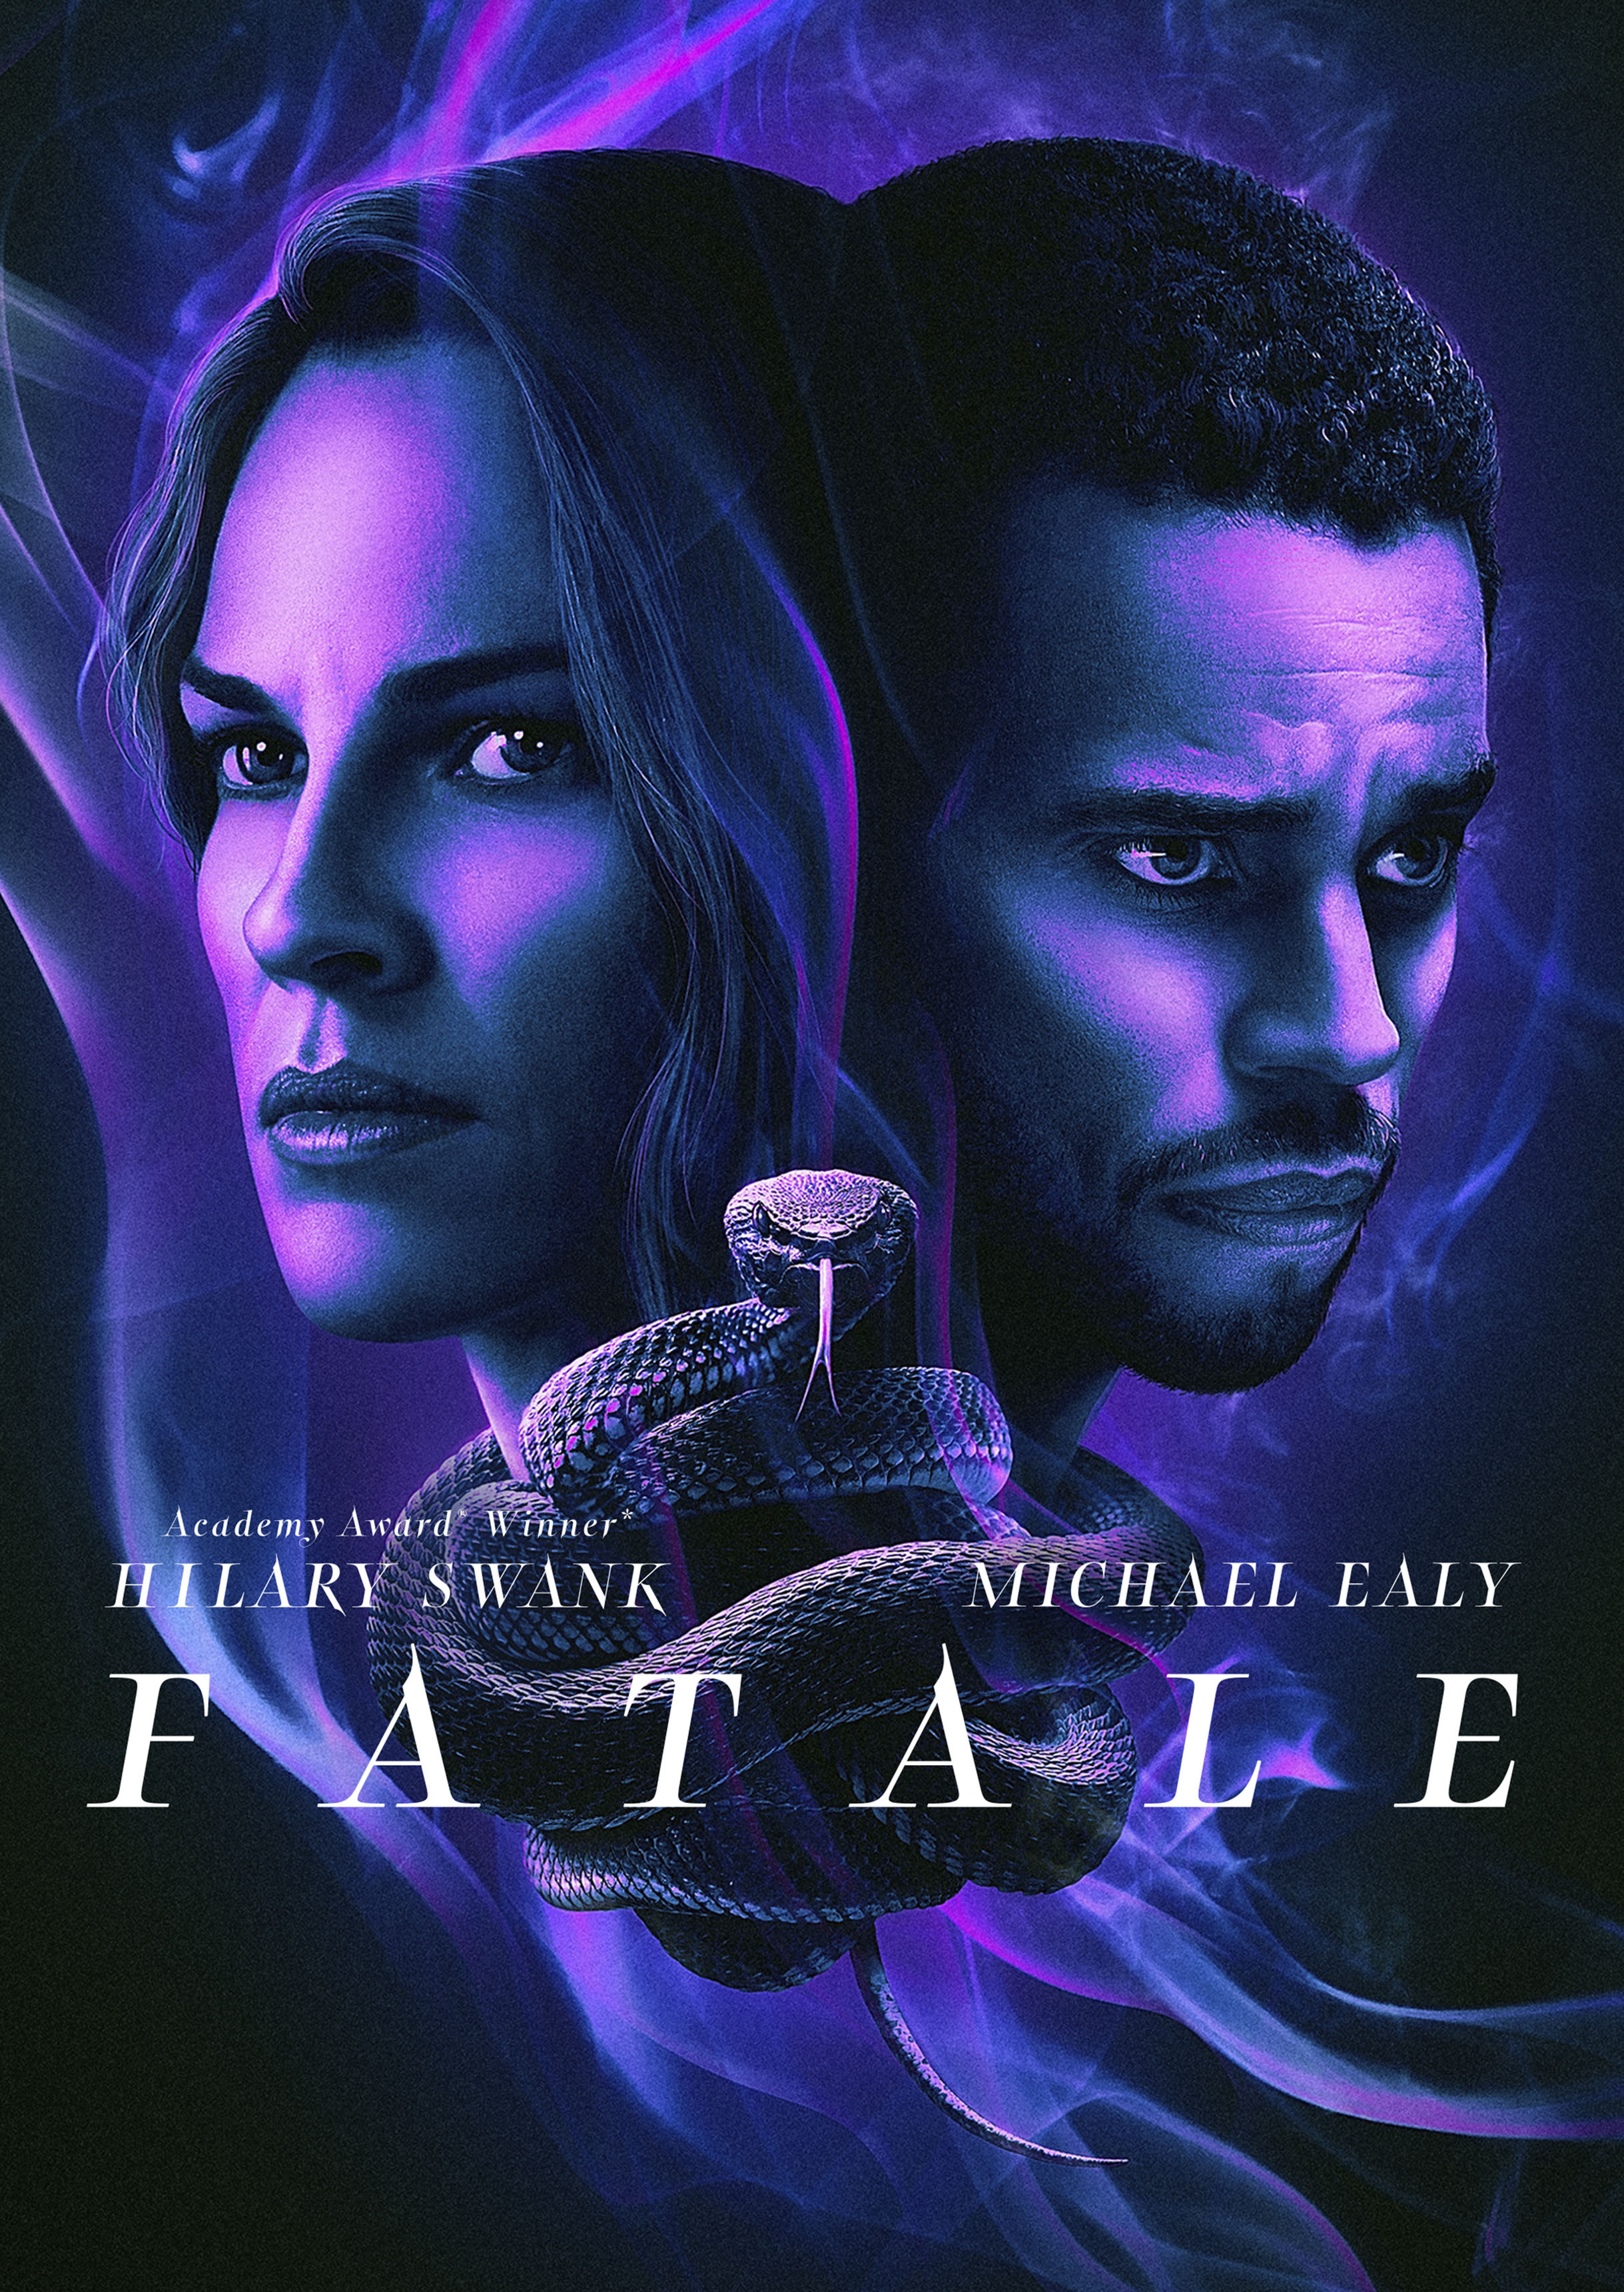 Fatale - DVD [ 2020 ]  - Thriller Movies On DVD - Movies On GRUV